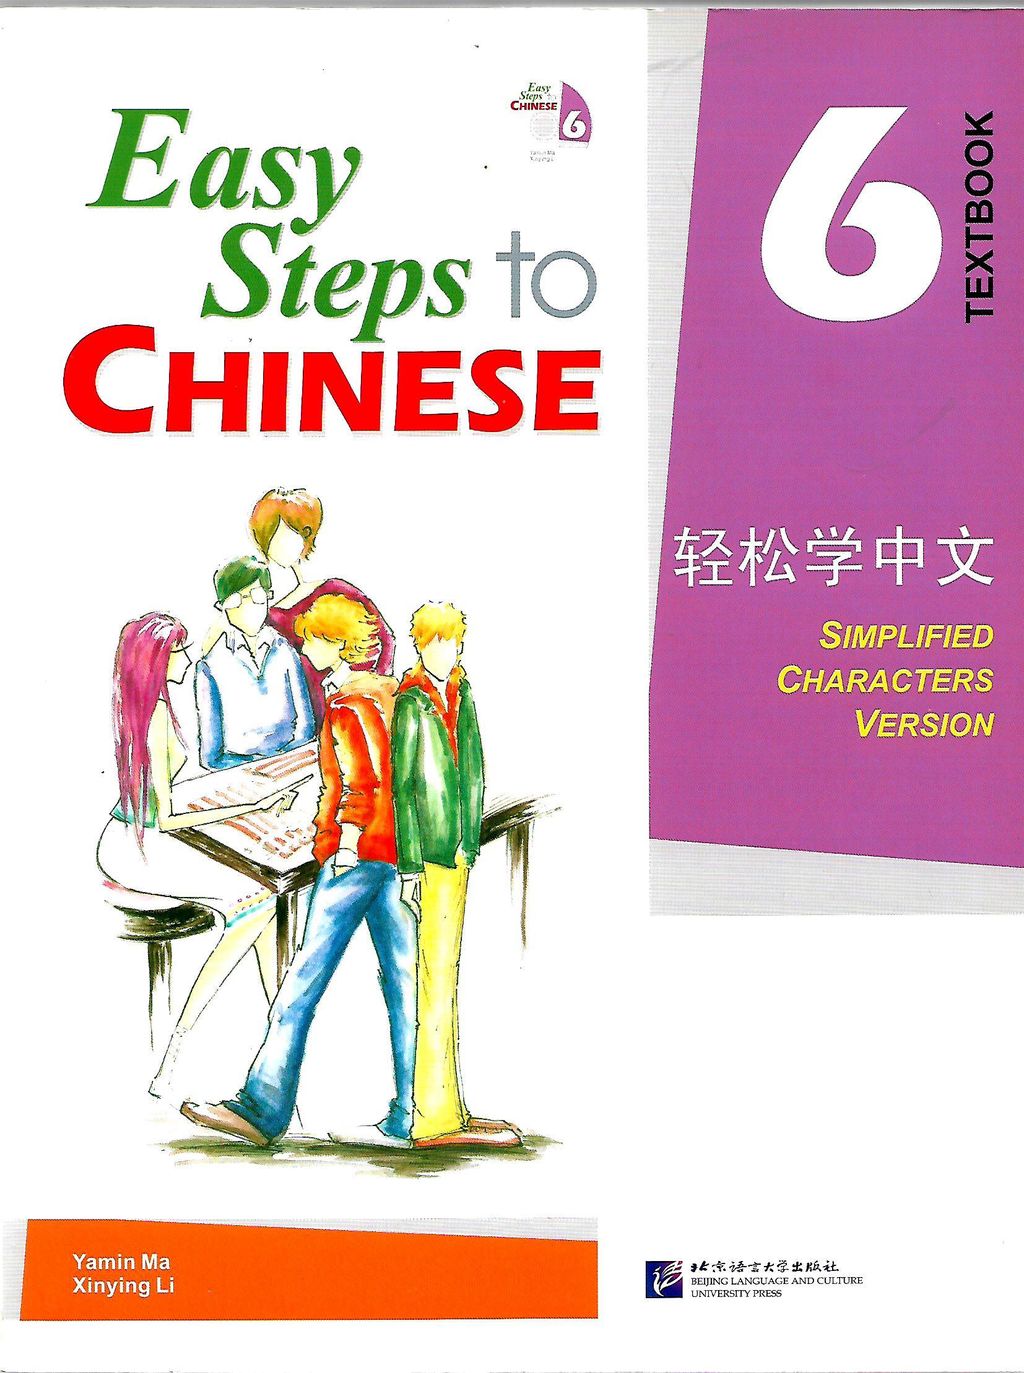 Step 6 учебник